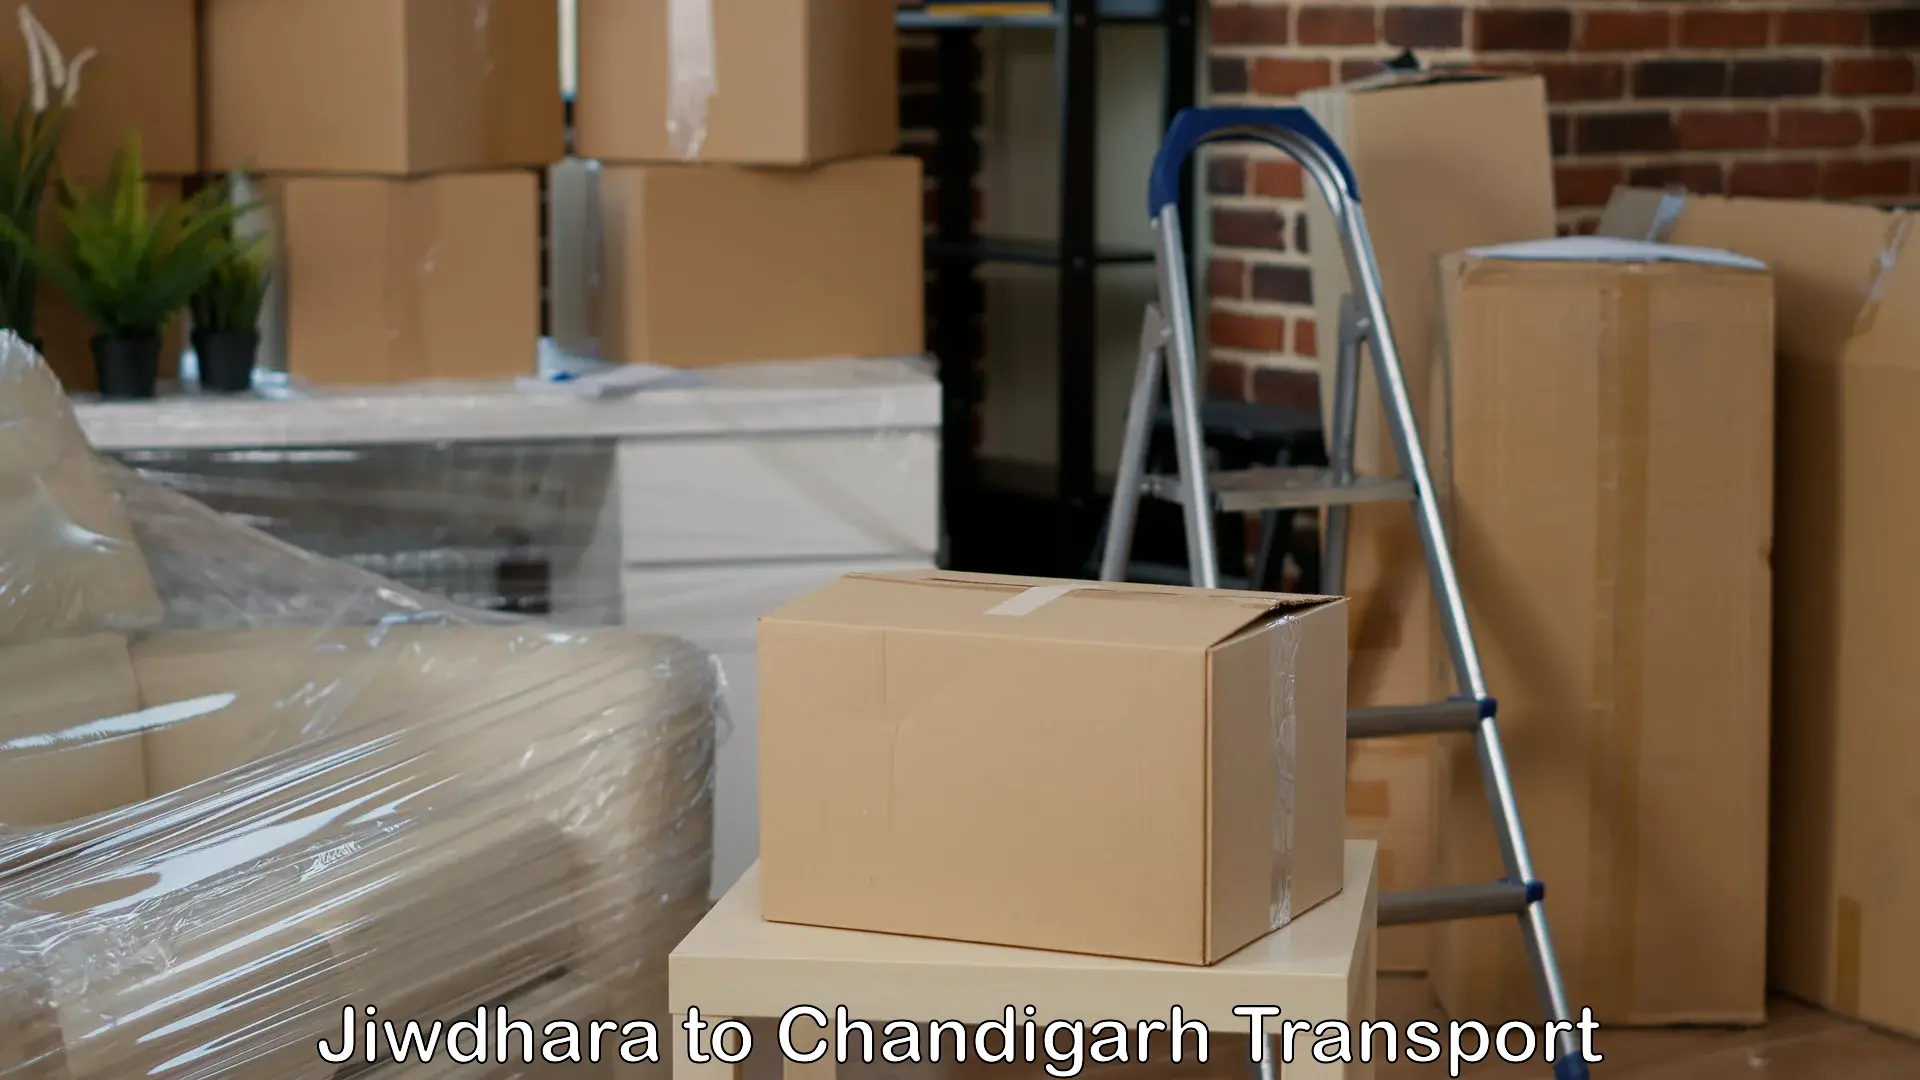 Furniture transport service Jiwdhara to Chandigarh